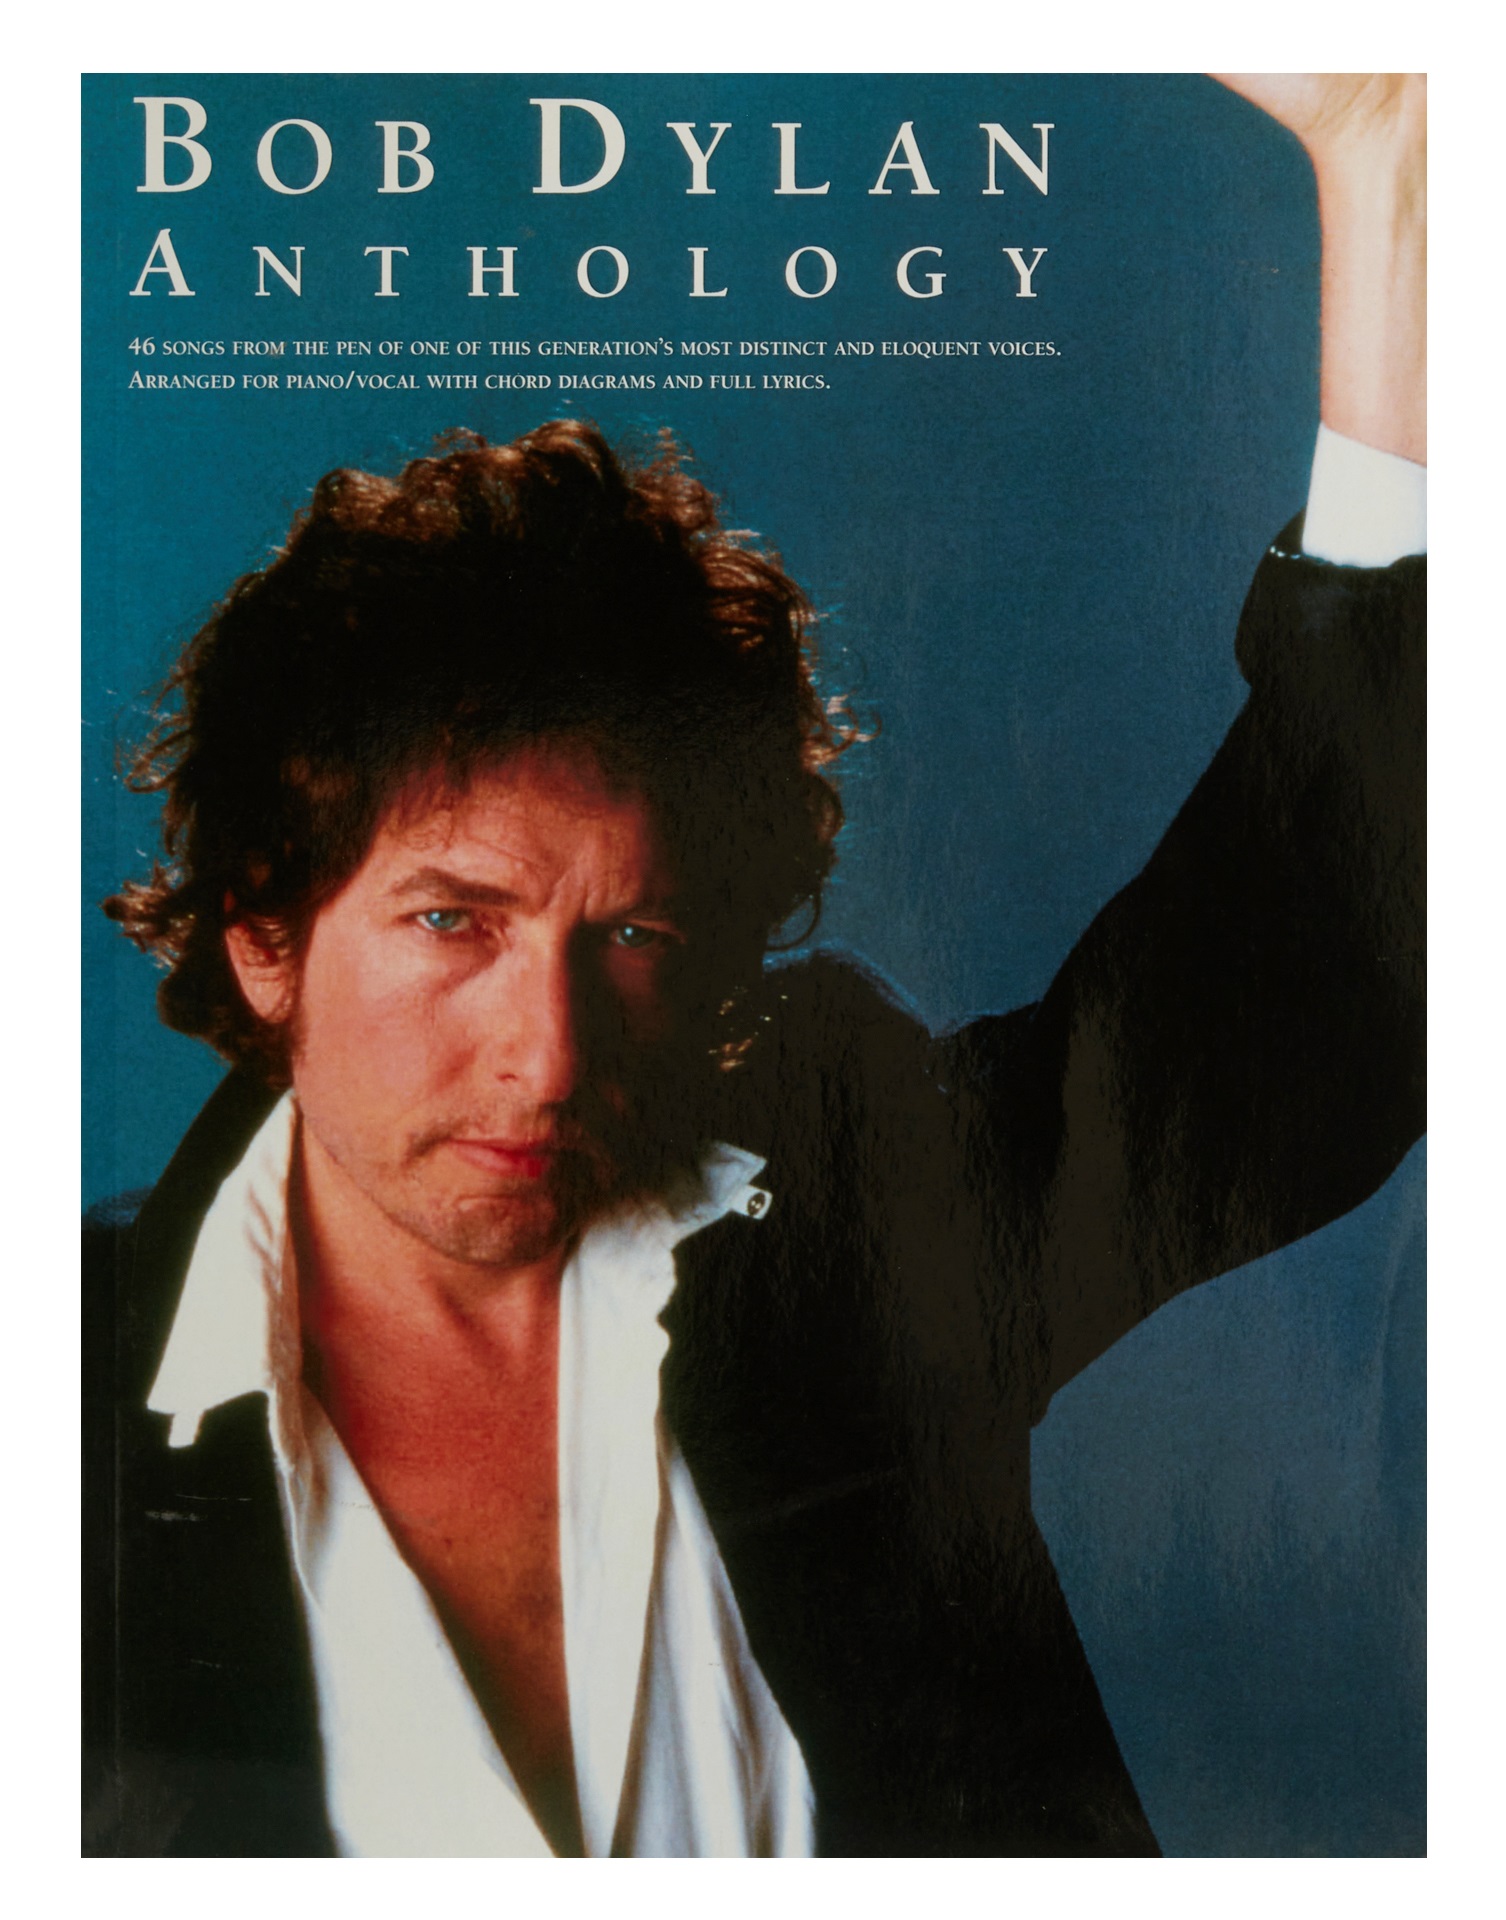 MS Anthology - Bob Dylan